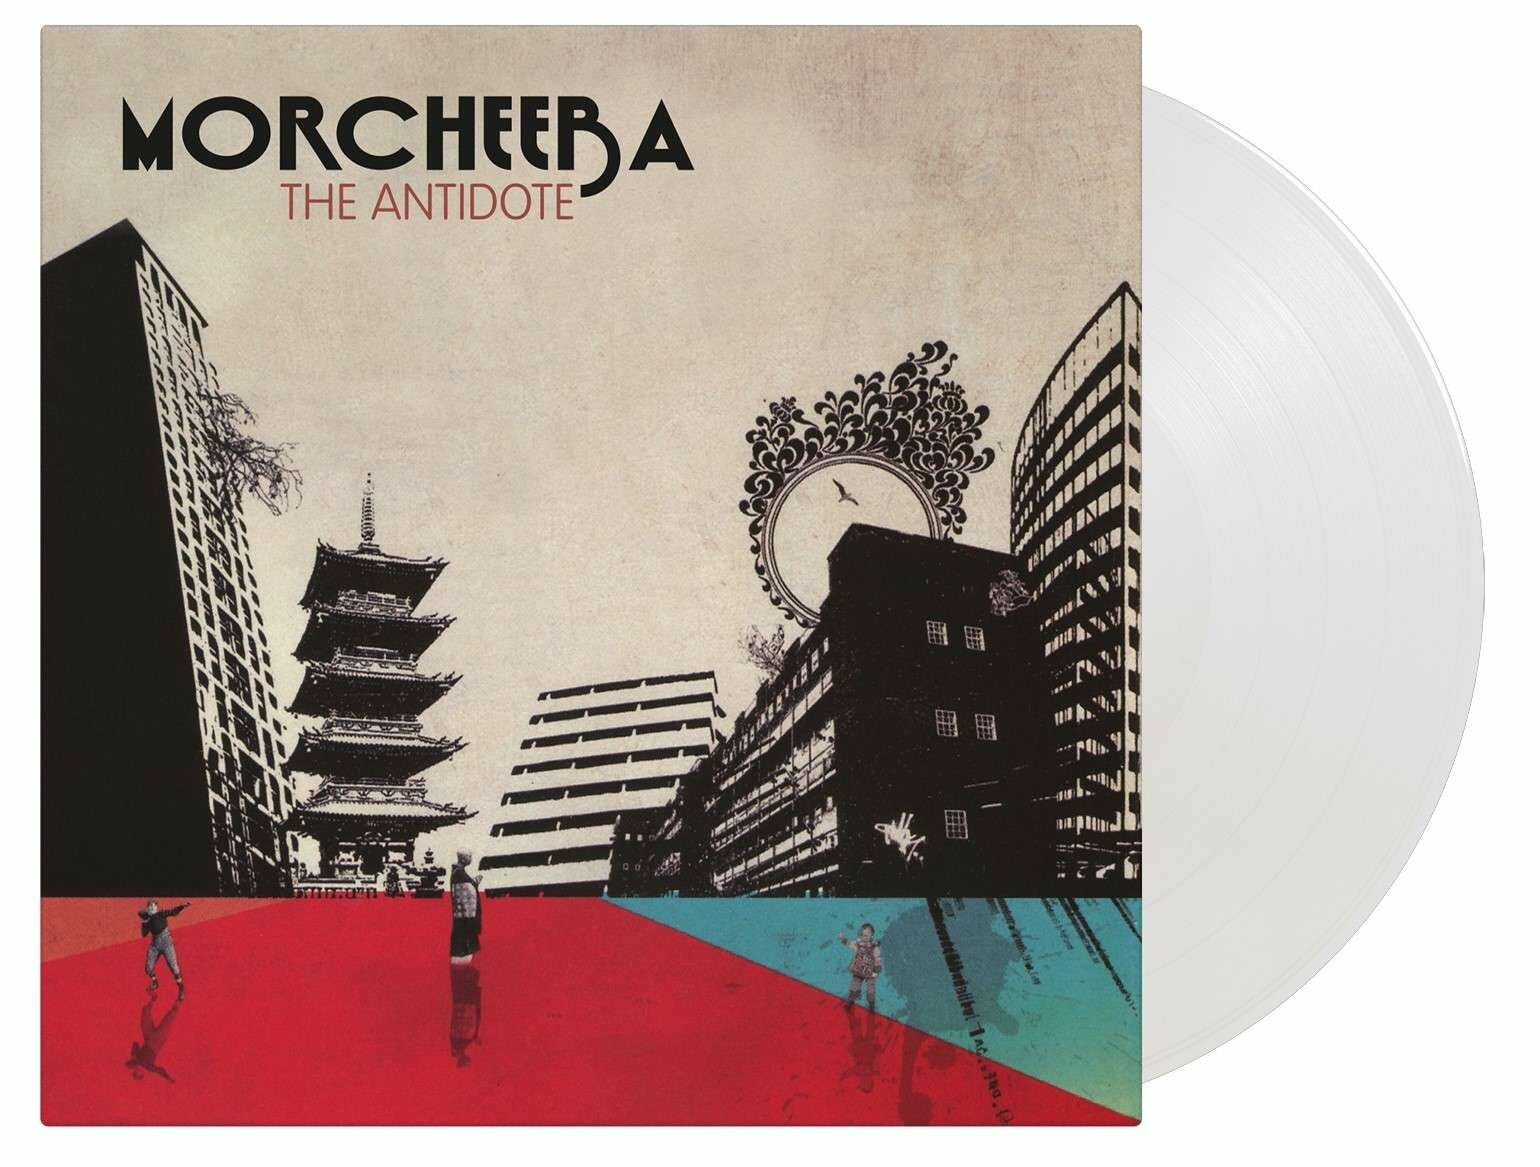 Виниловая пластинка Morcheeba - The Antidote (180g) (Limited Numbered Edition) (Crystal Clear Vinyl) 1500 пронумерованных копий (1 LP)